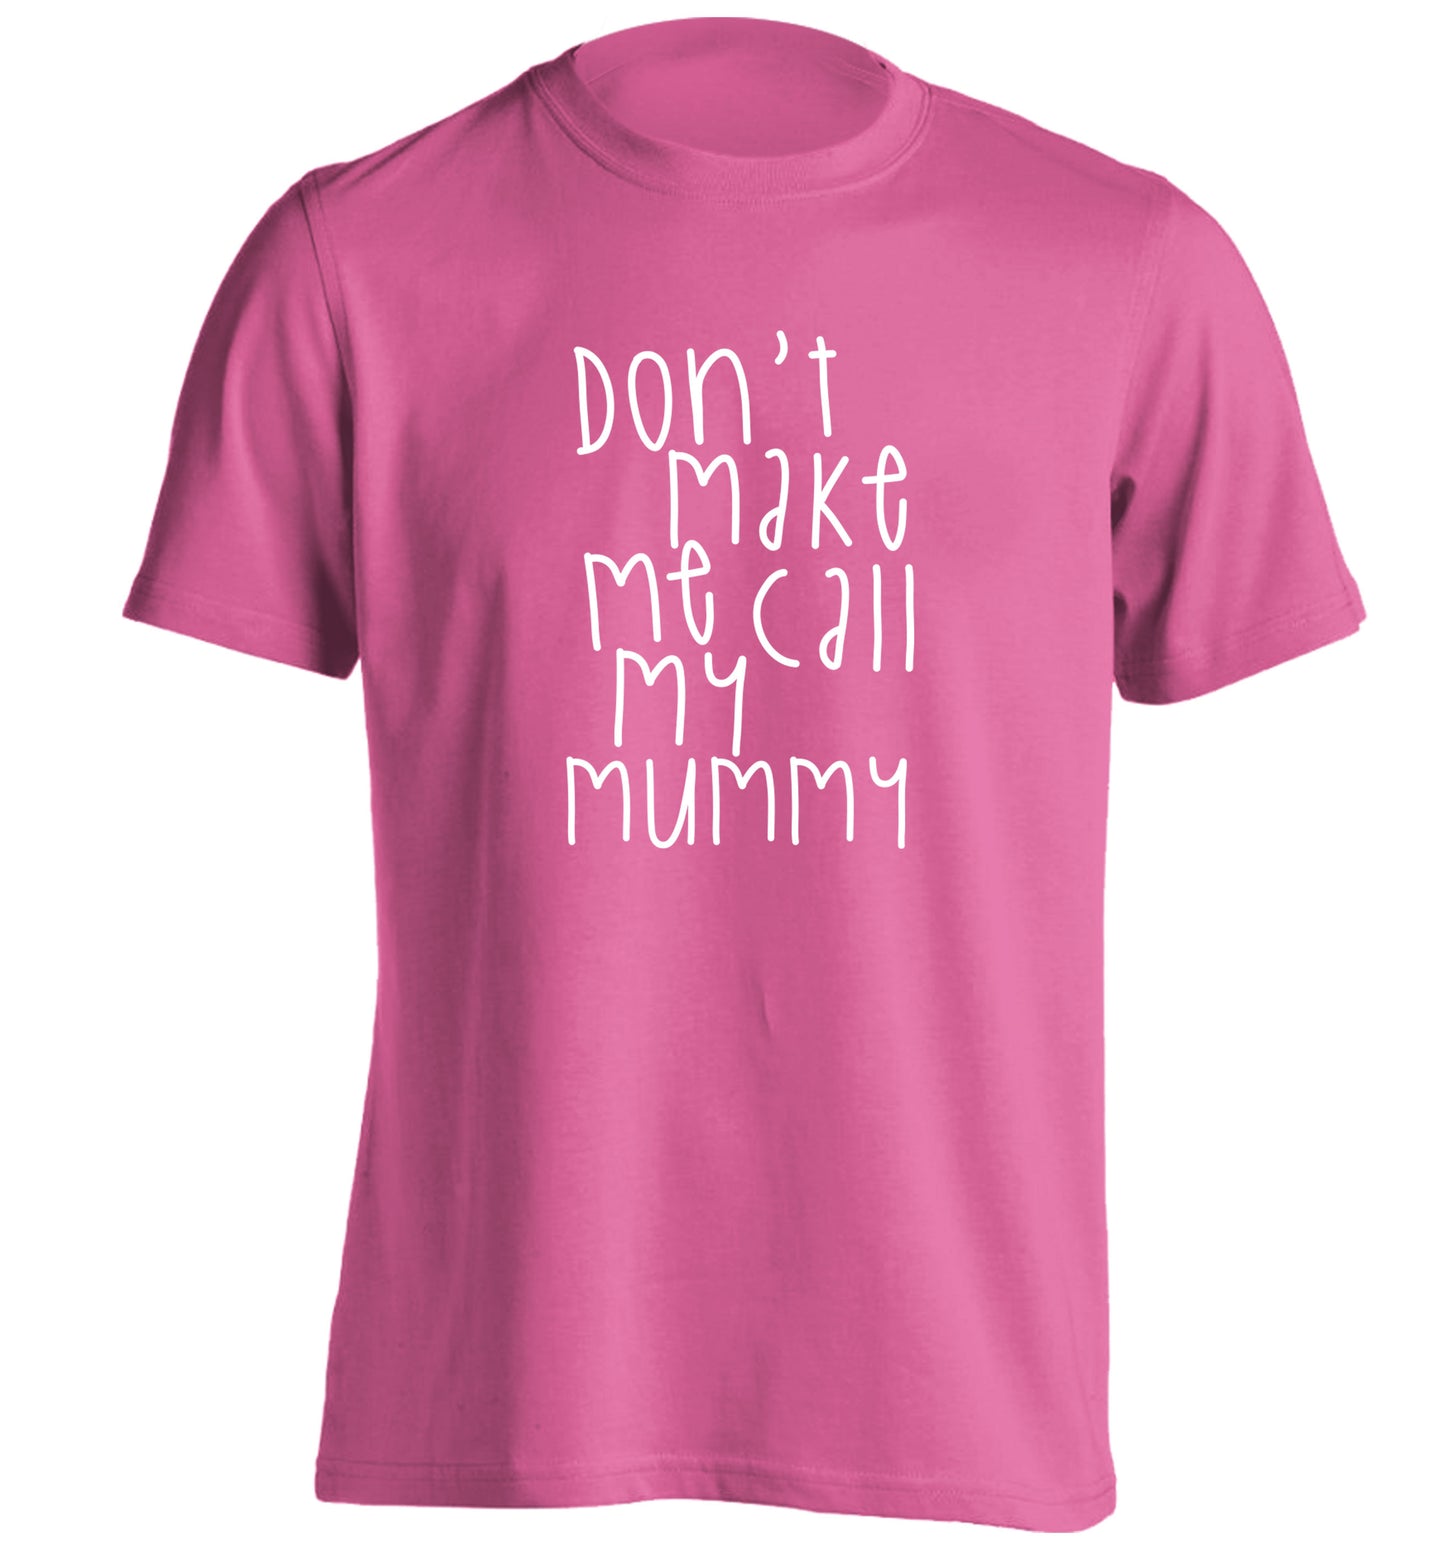 Don't make me call my mummy adults unisex pink Tshirt 2XL